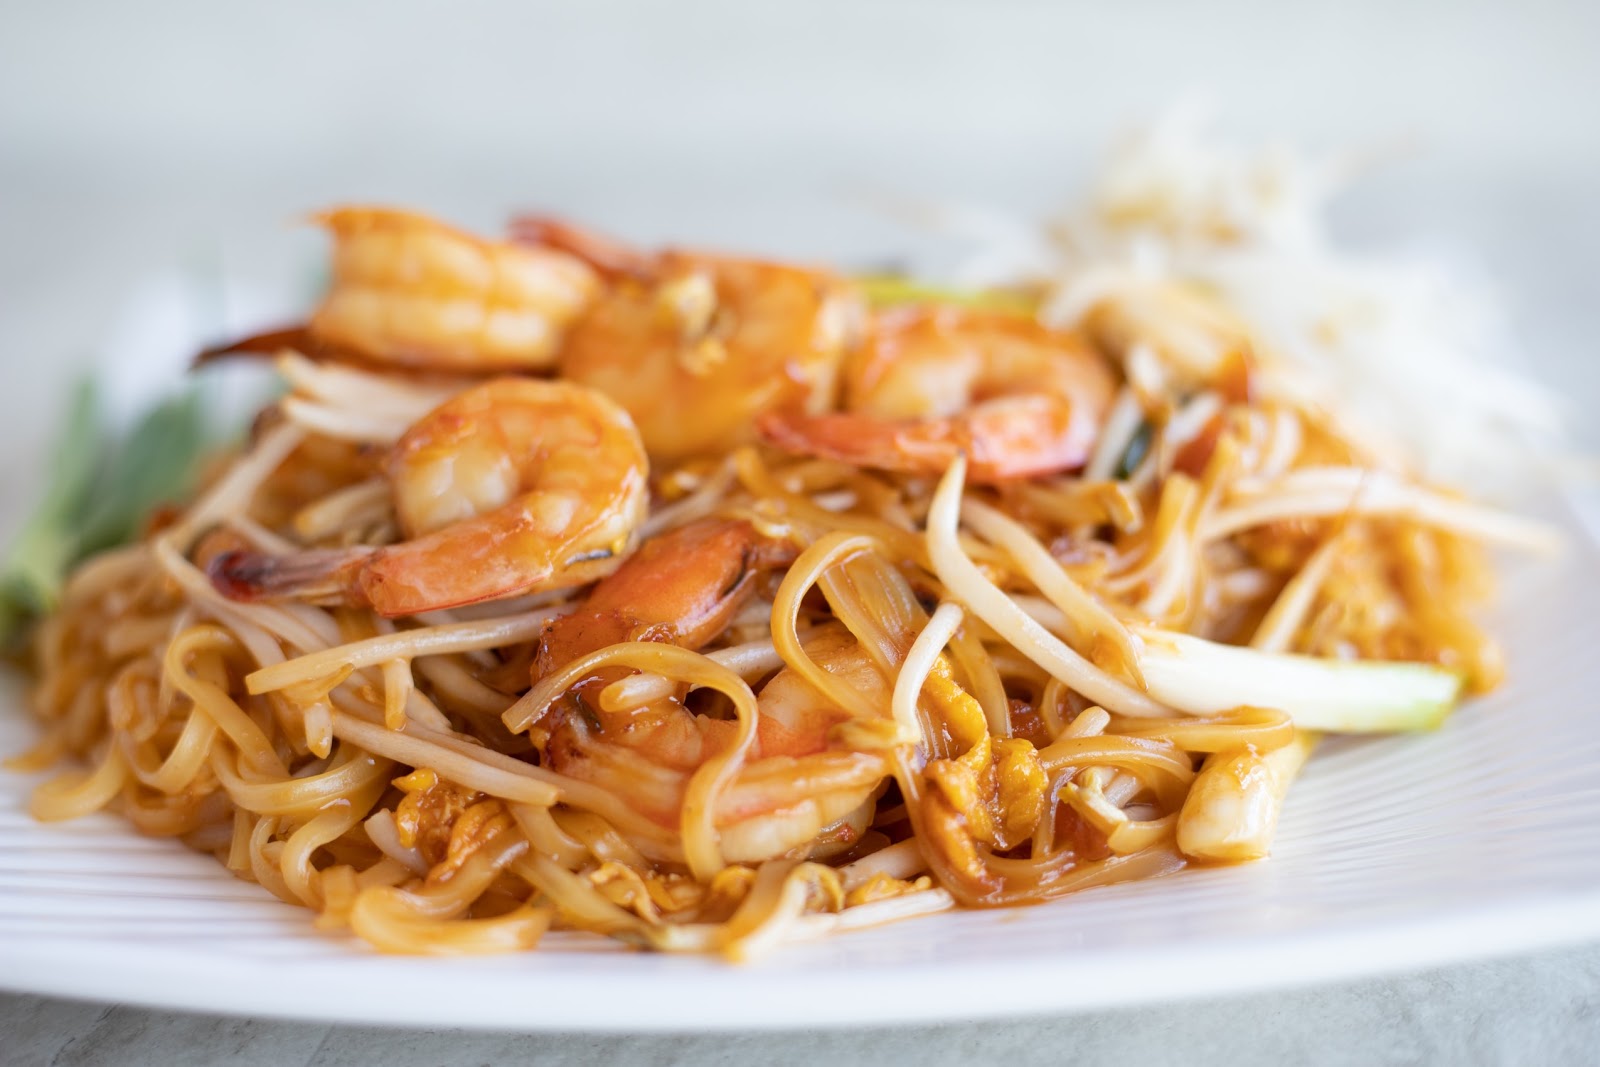 Best Asian Food Austin: pad thai